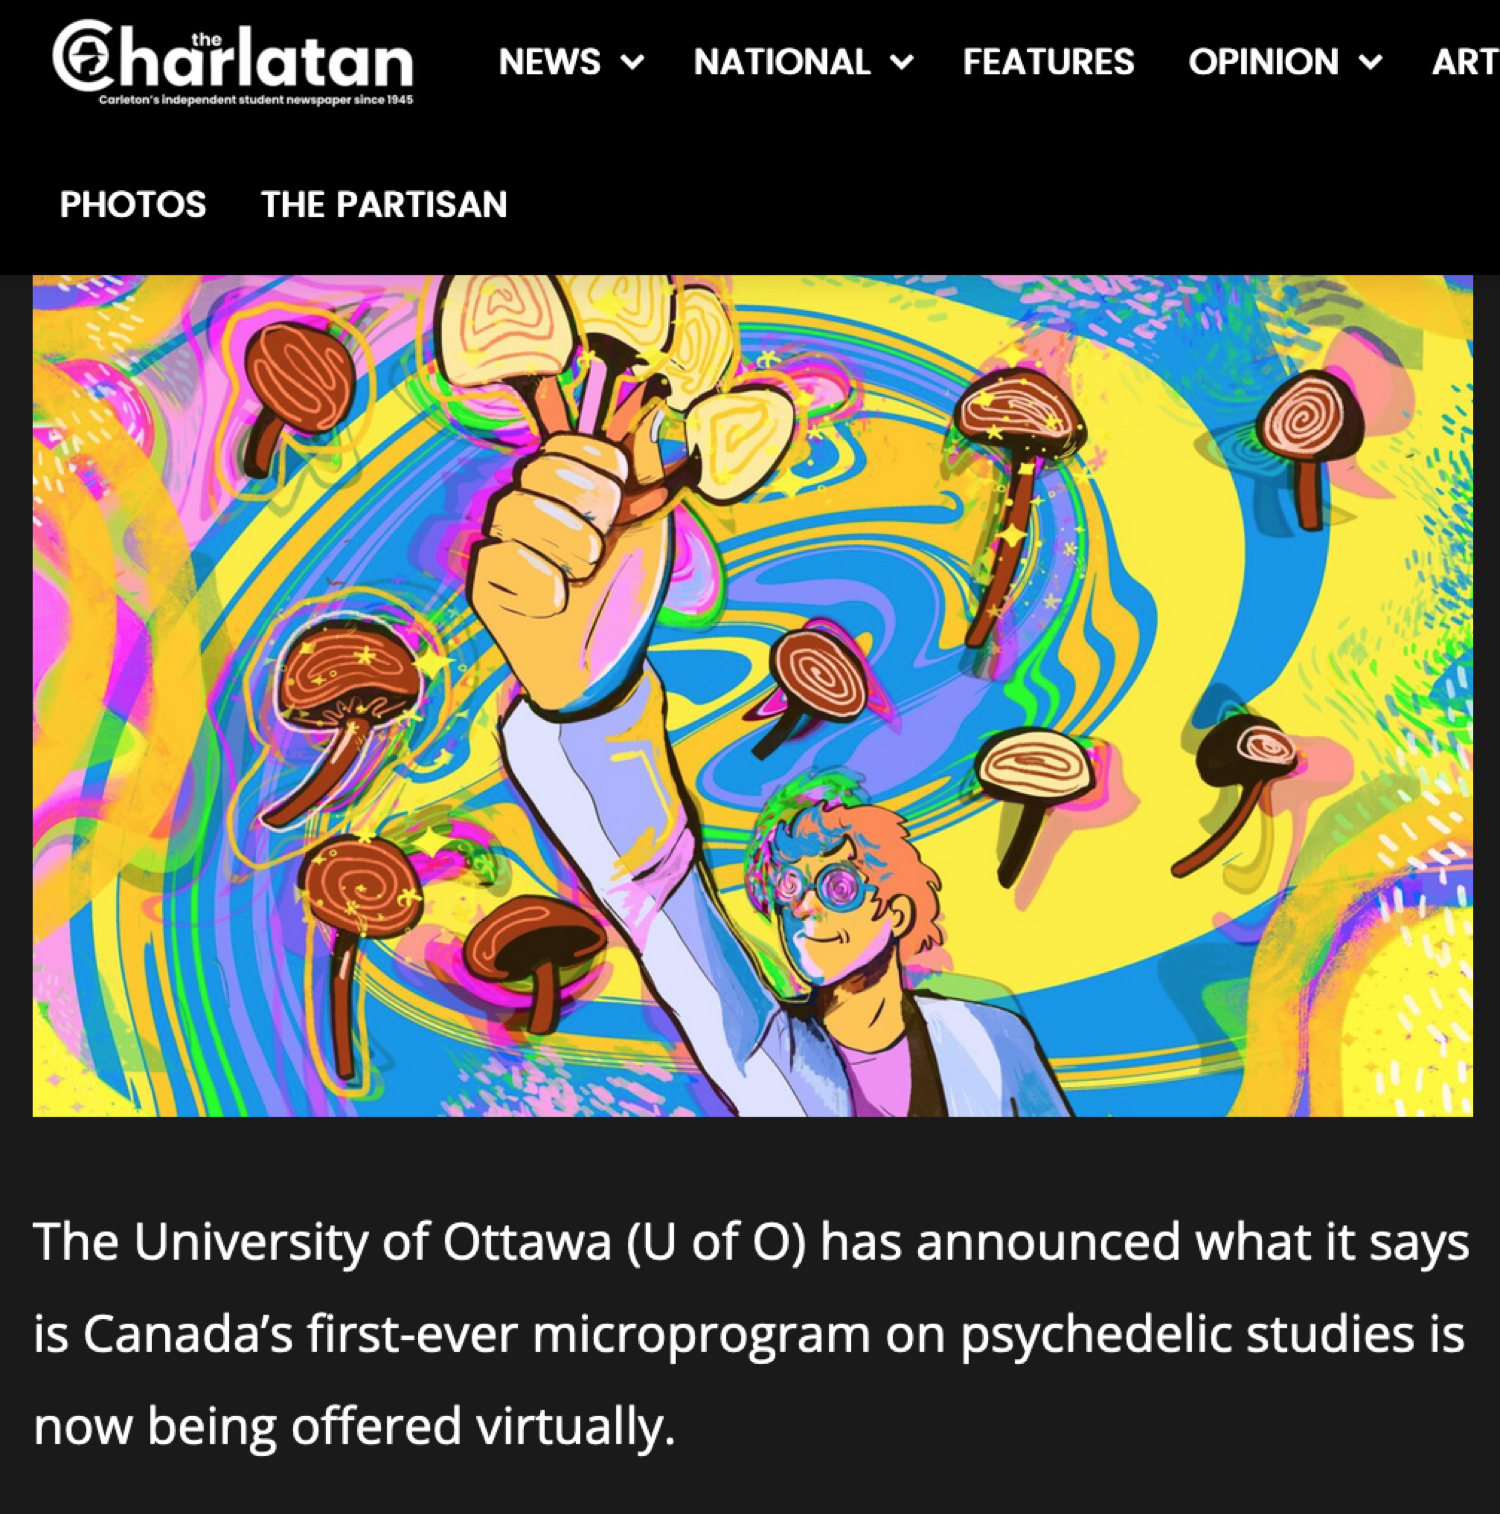 University of Ottawa unveils virtual microprogram on psychedelic studies